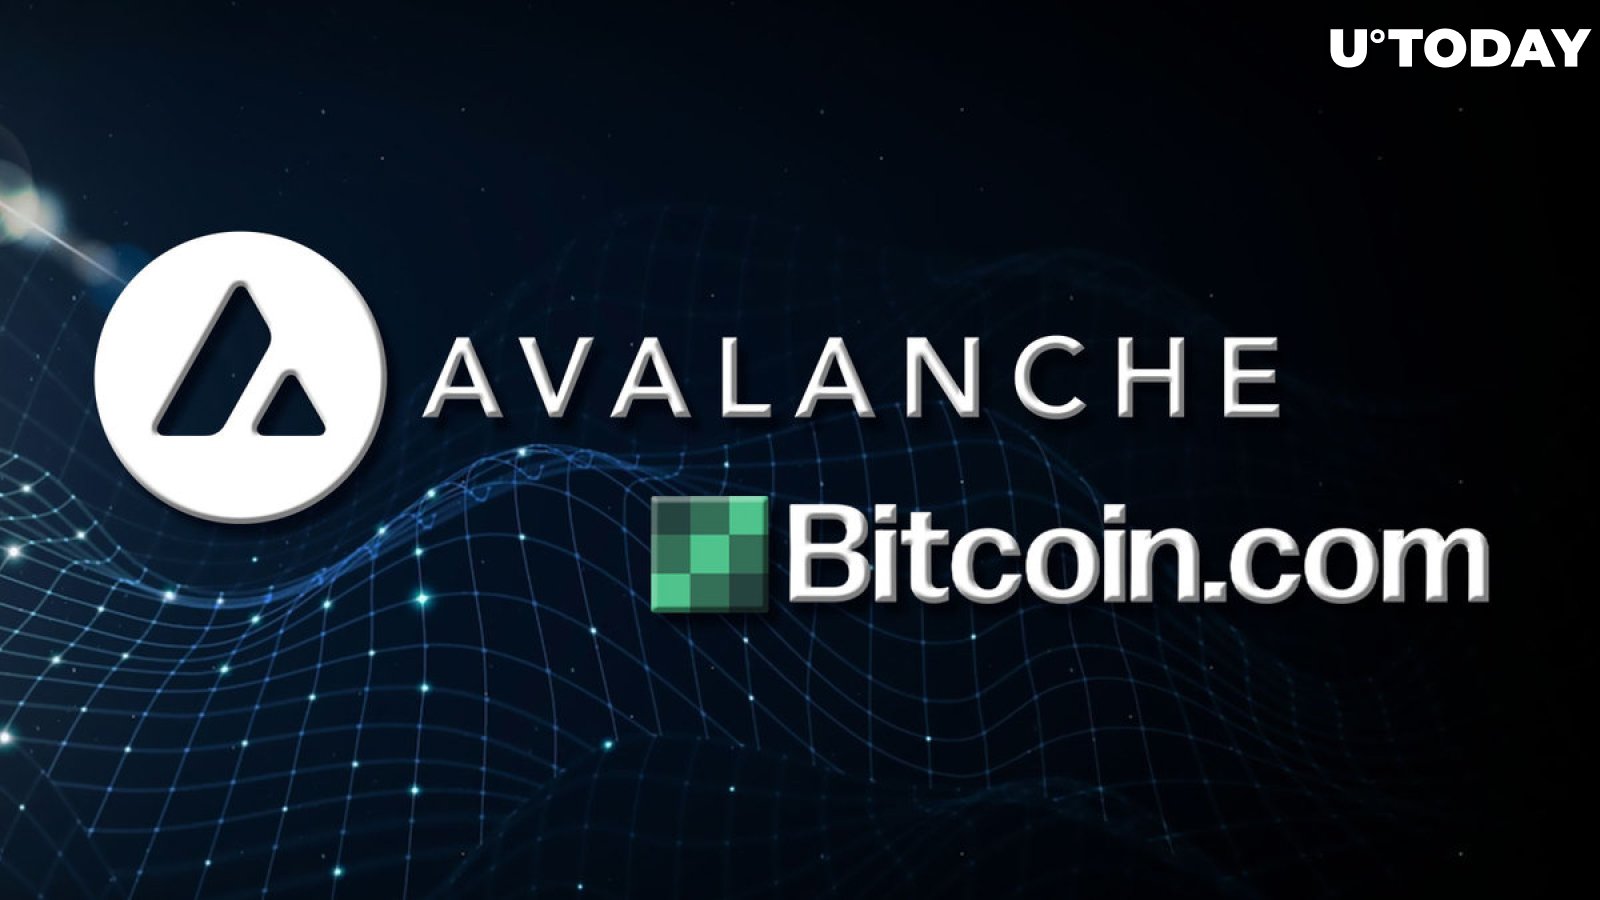 Avalanche (AVAX) Crypto Now Available in Bitcoin.com Wallet